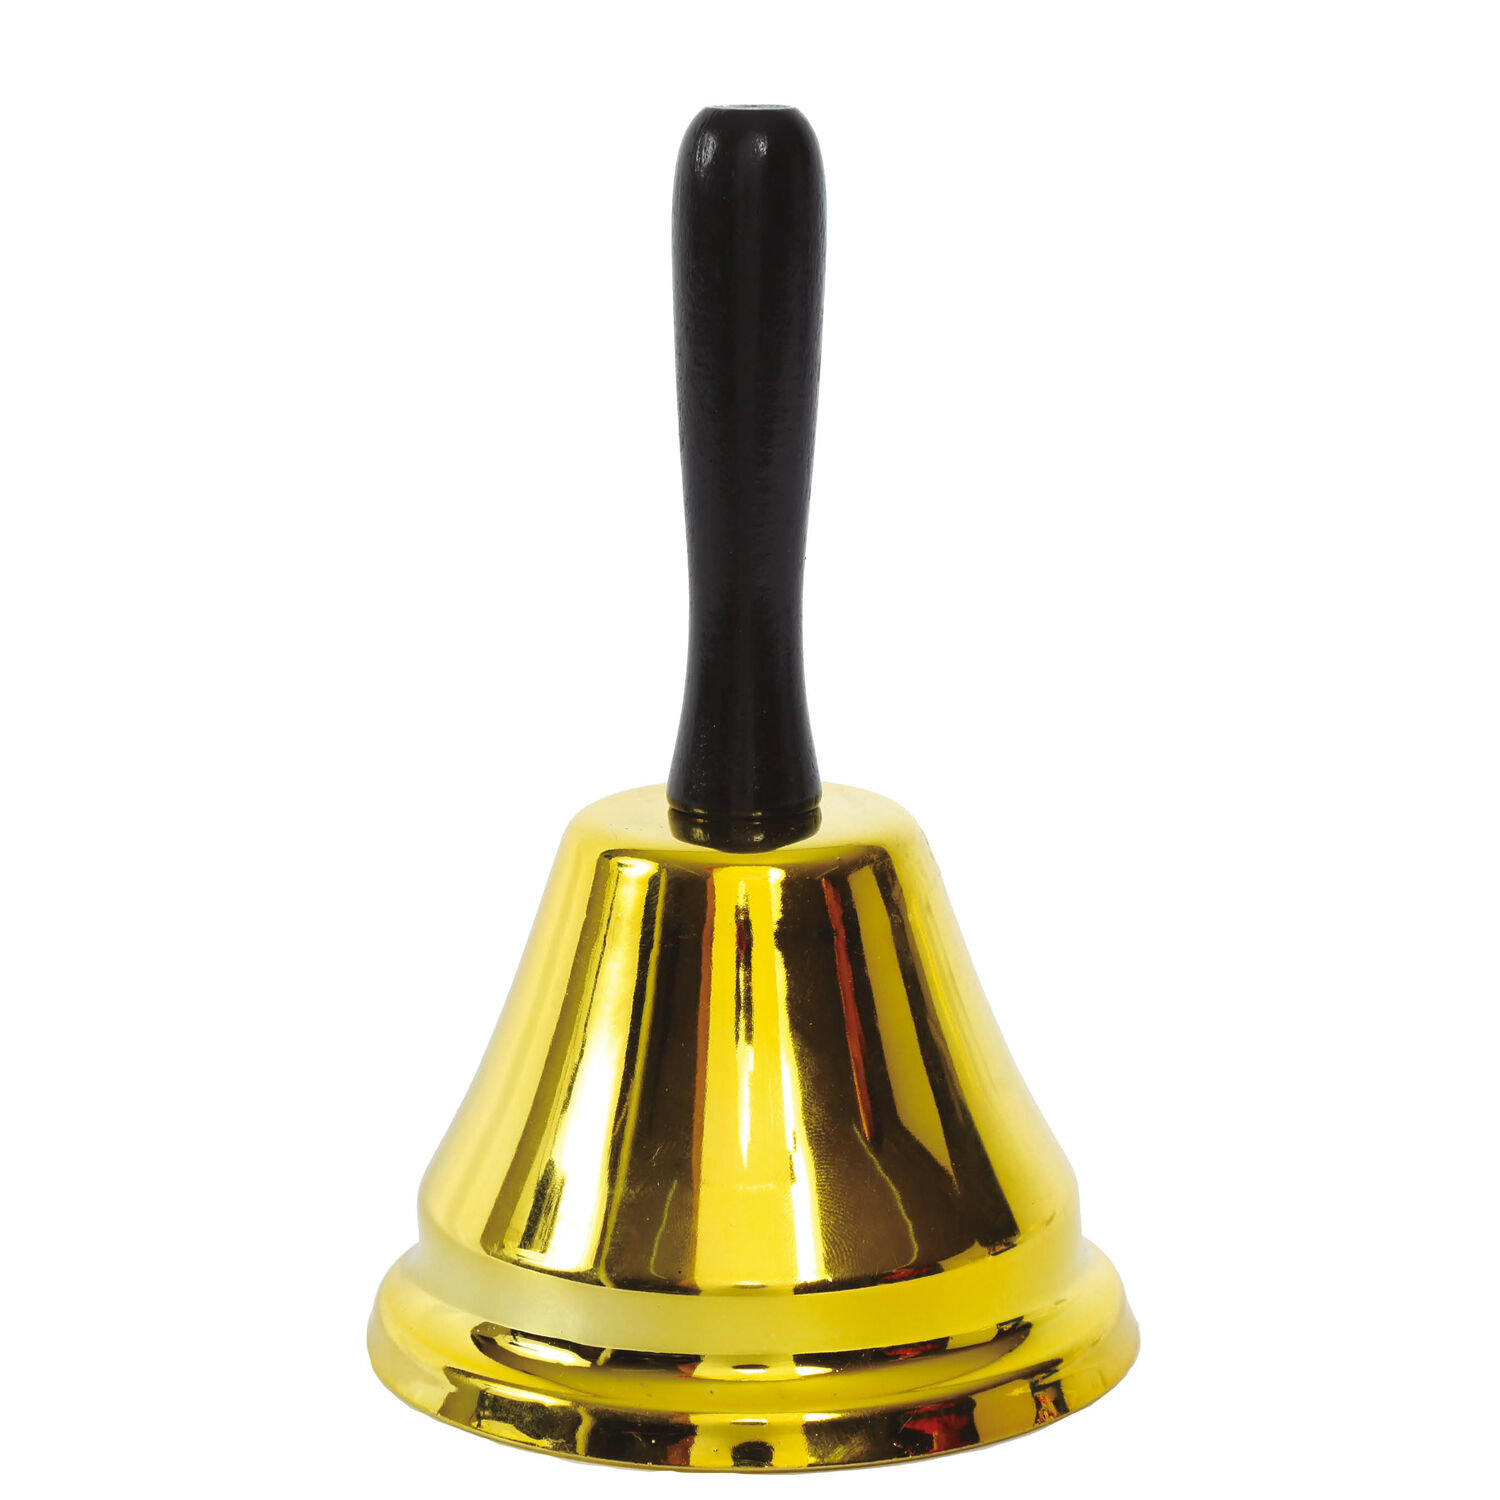 NEU Nikolaus-Glocke mit schwarzem Griff, gold, ca. 15cm